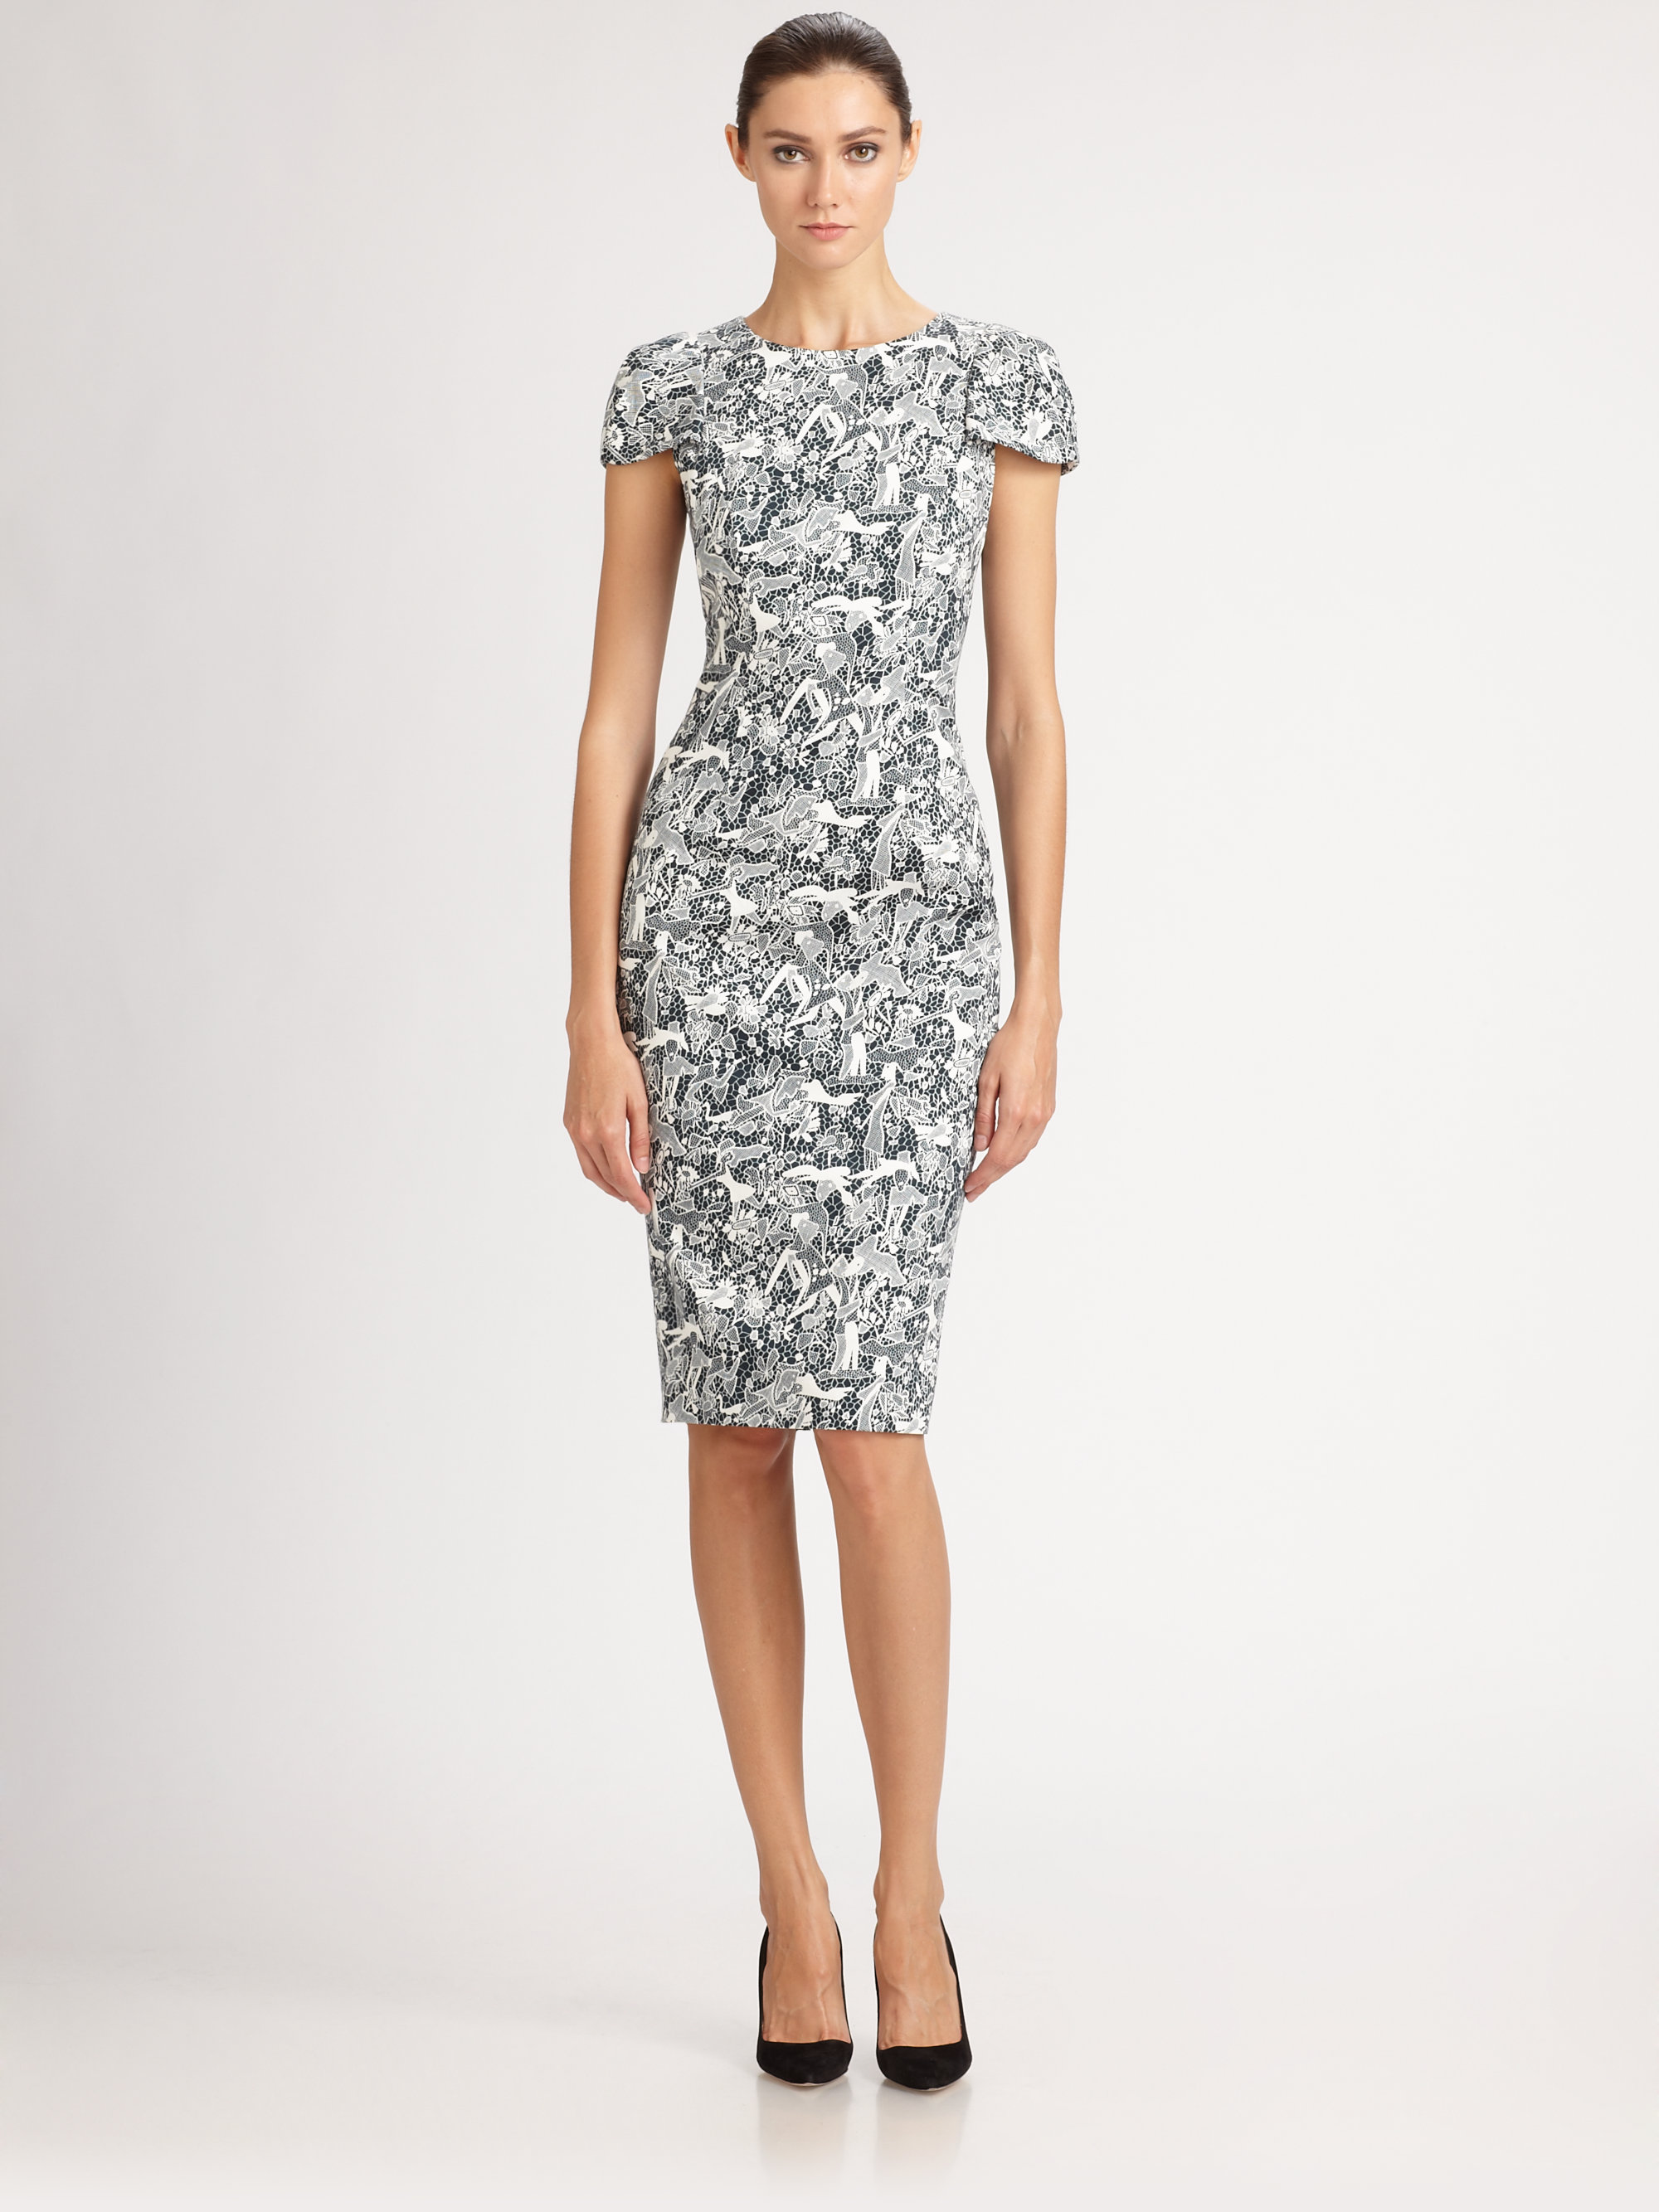 Carolina herrera Lace Print Dress in Gray | Lyst